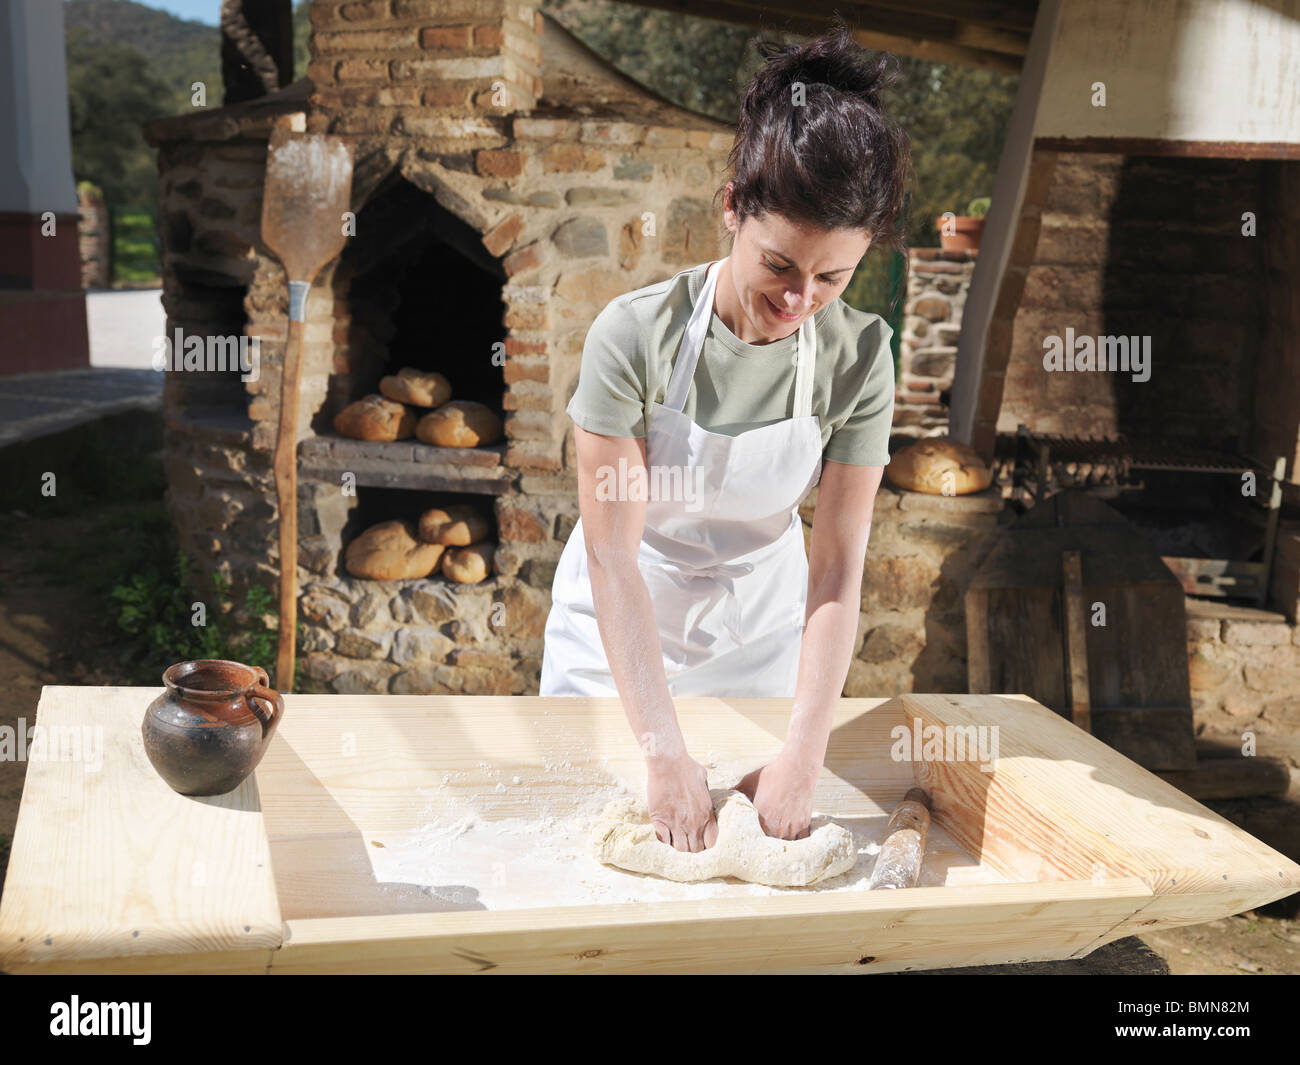 Woman kneading bread dough Stock Photo